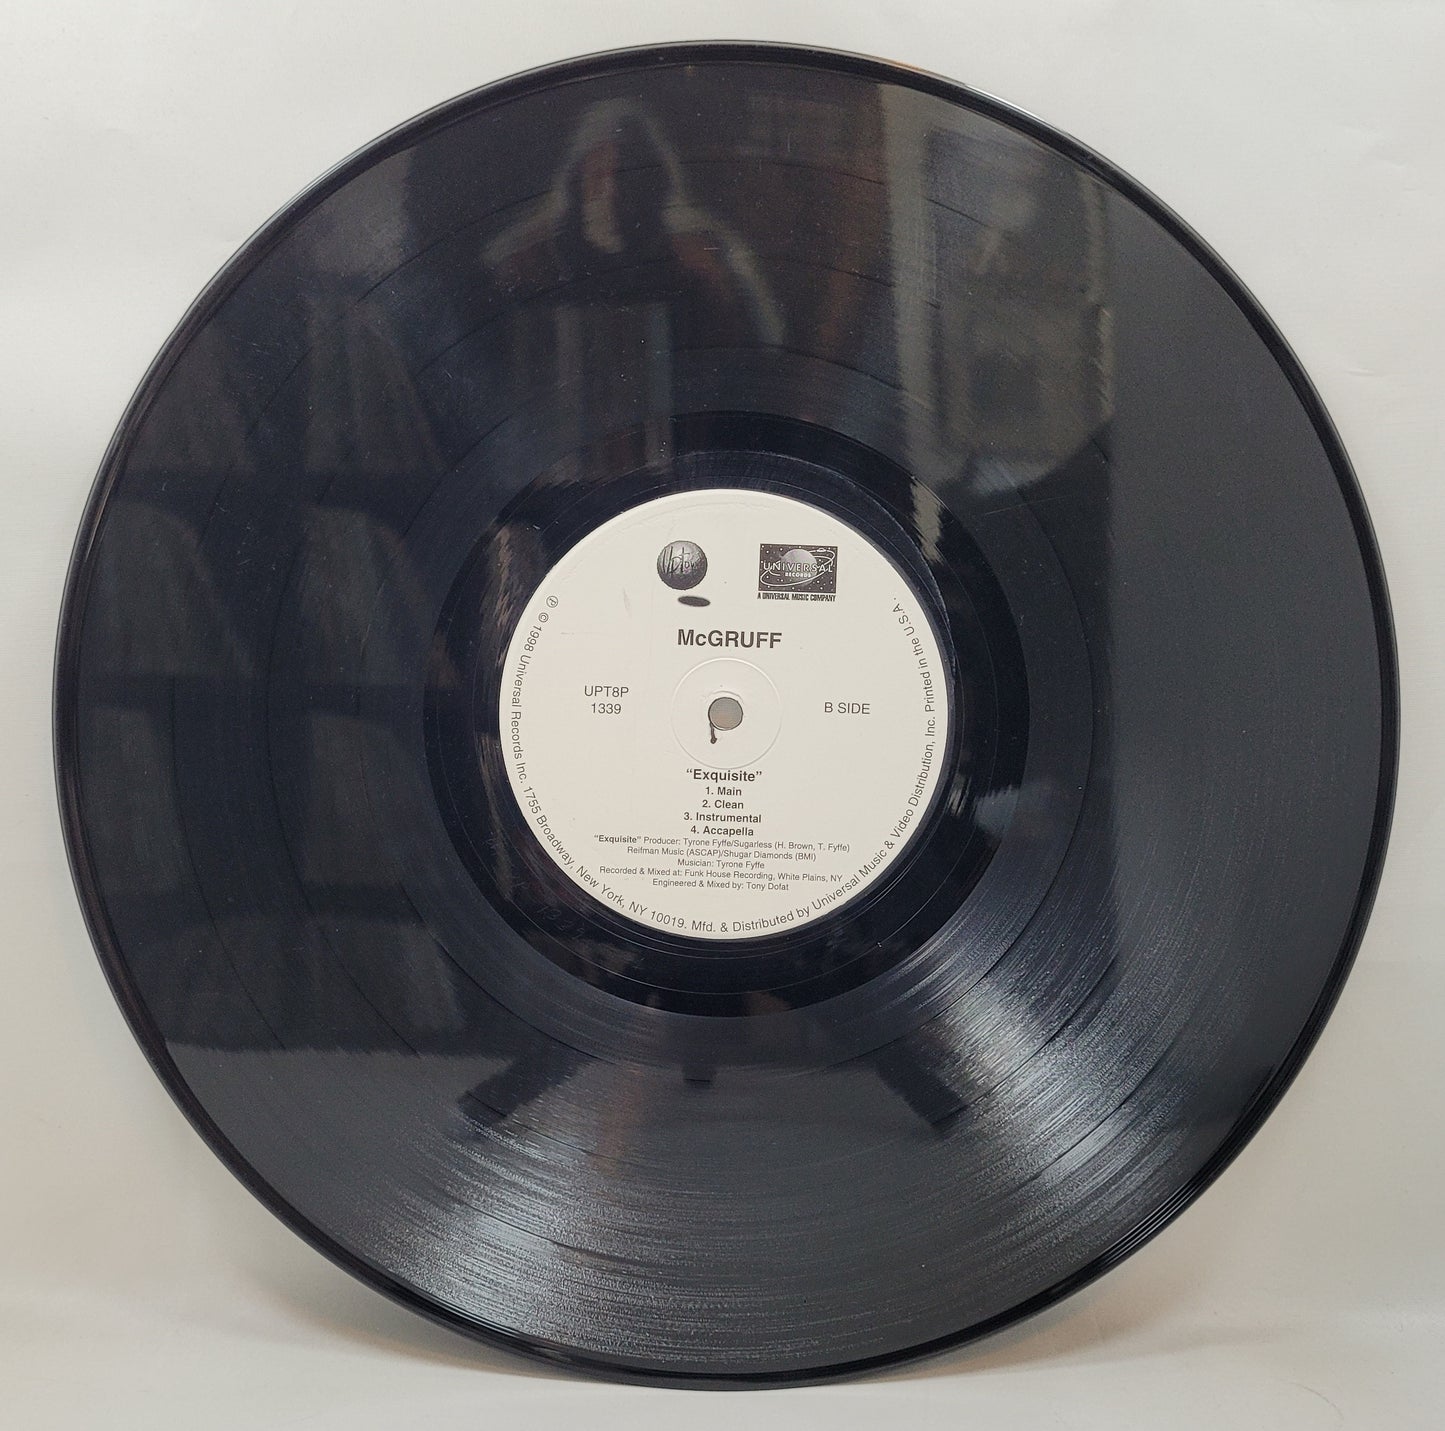 McGruff (Herb McGruff) - Many Know [Vinyl Record 12" Single]